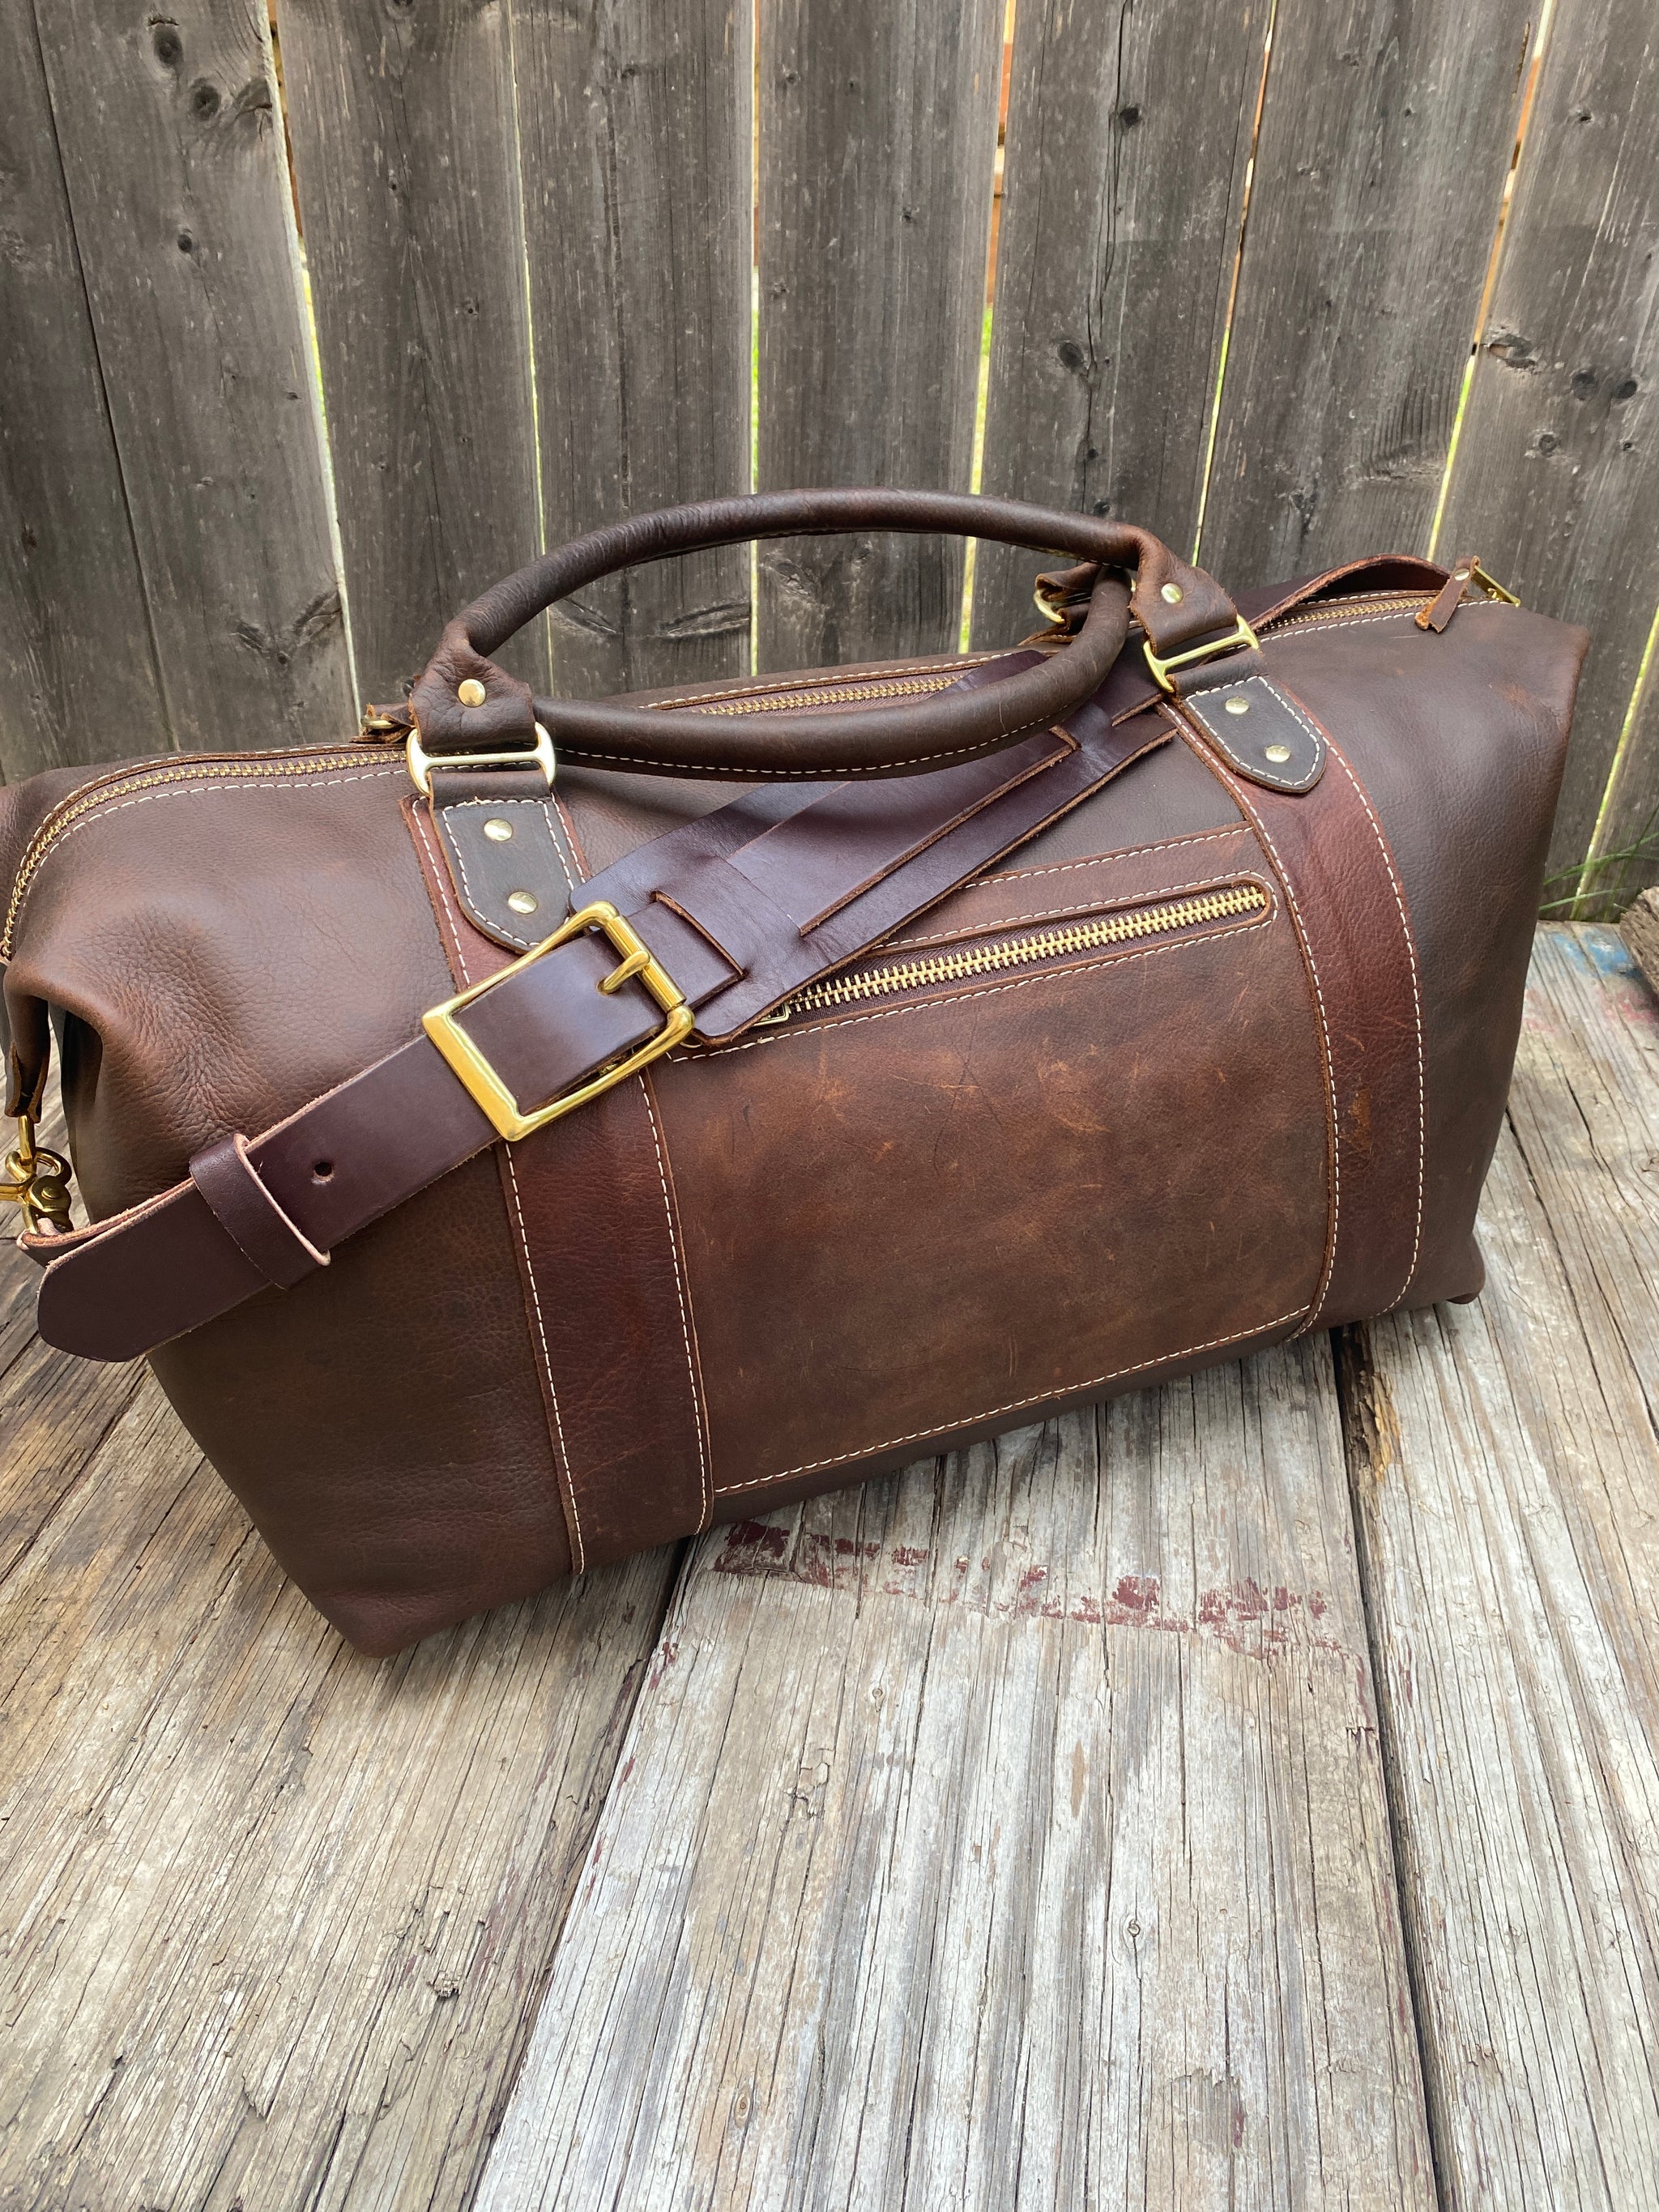 Carry on Luggage - Handmade Leather Bags, Large Weekender-Brown Pebble ...